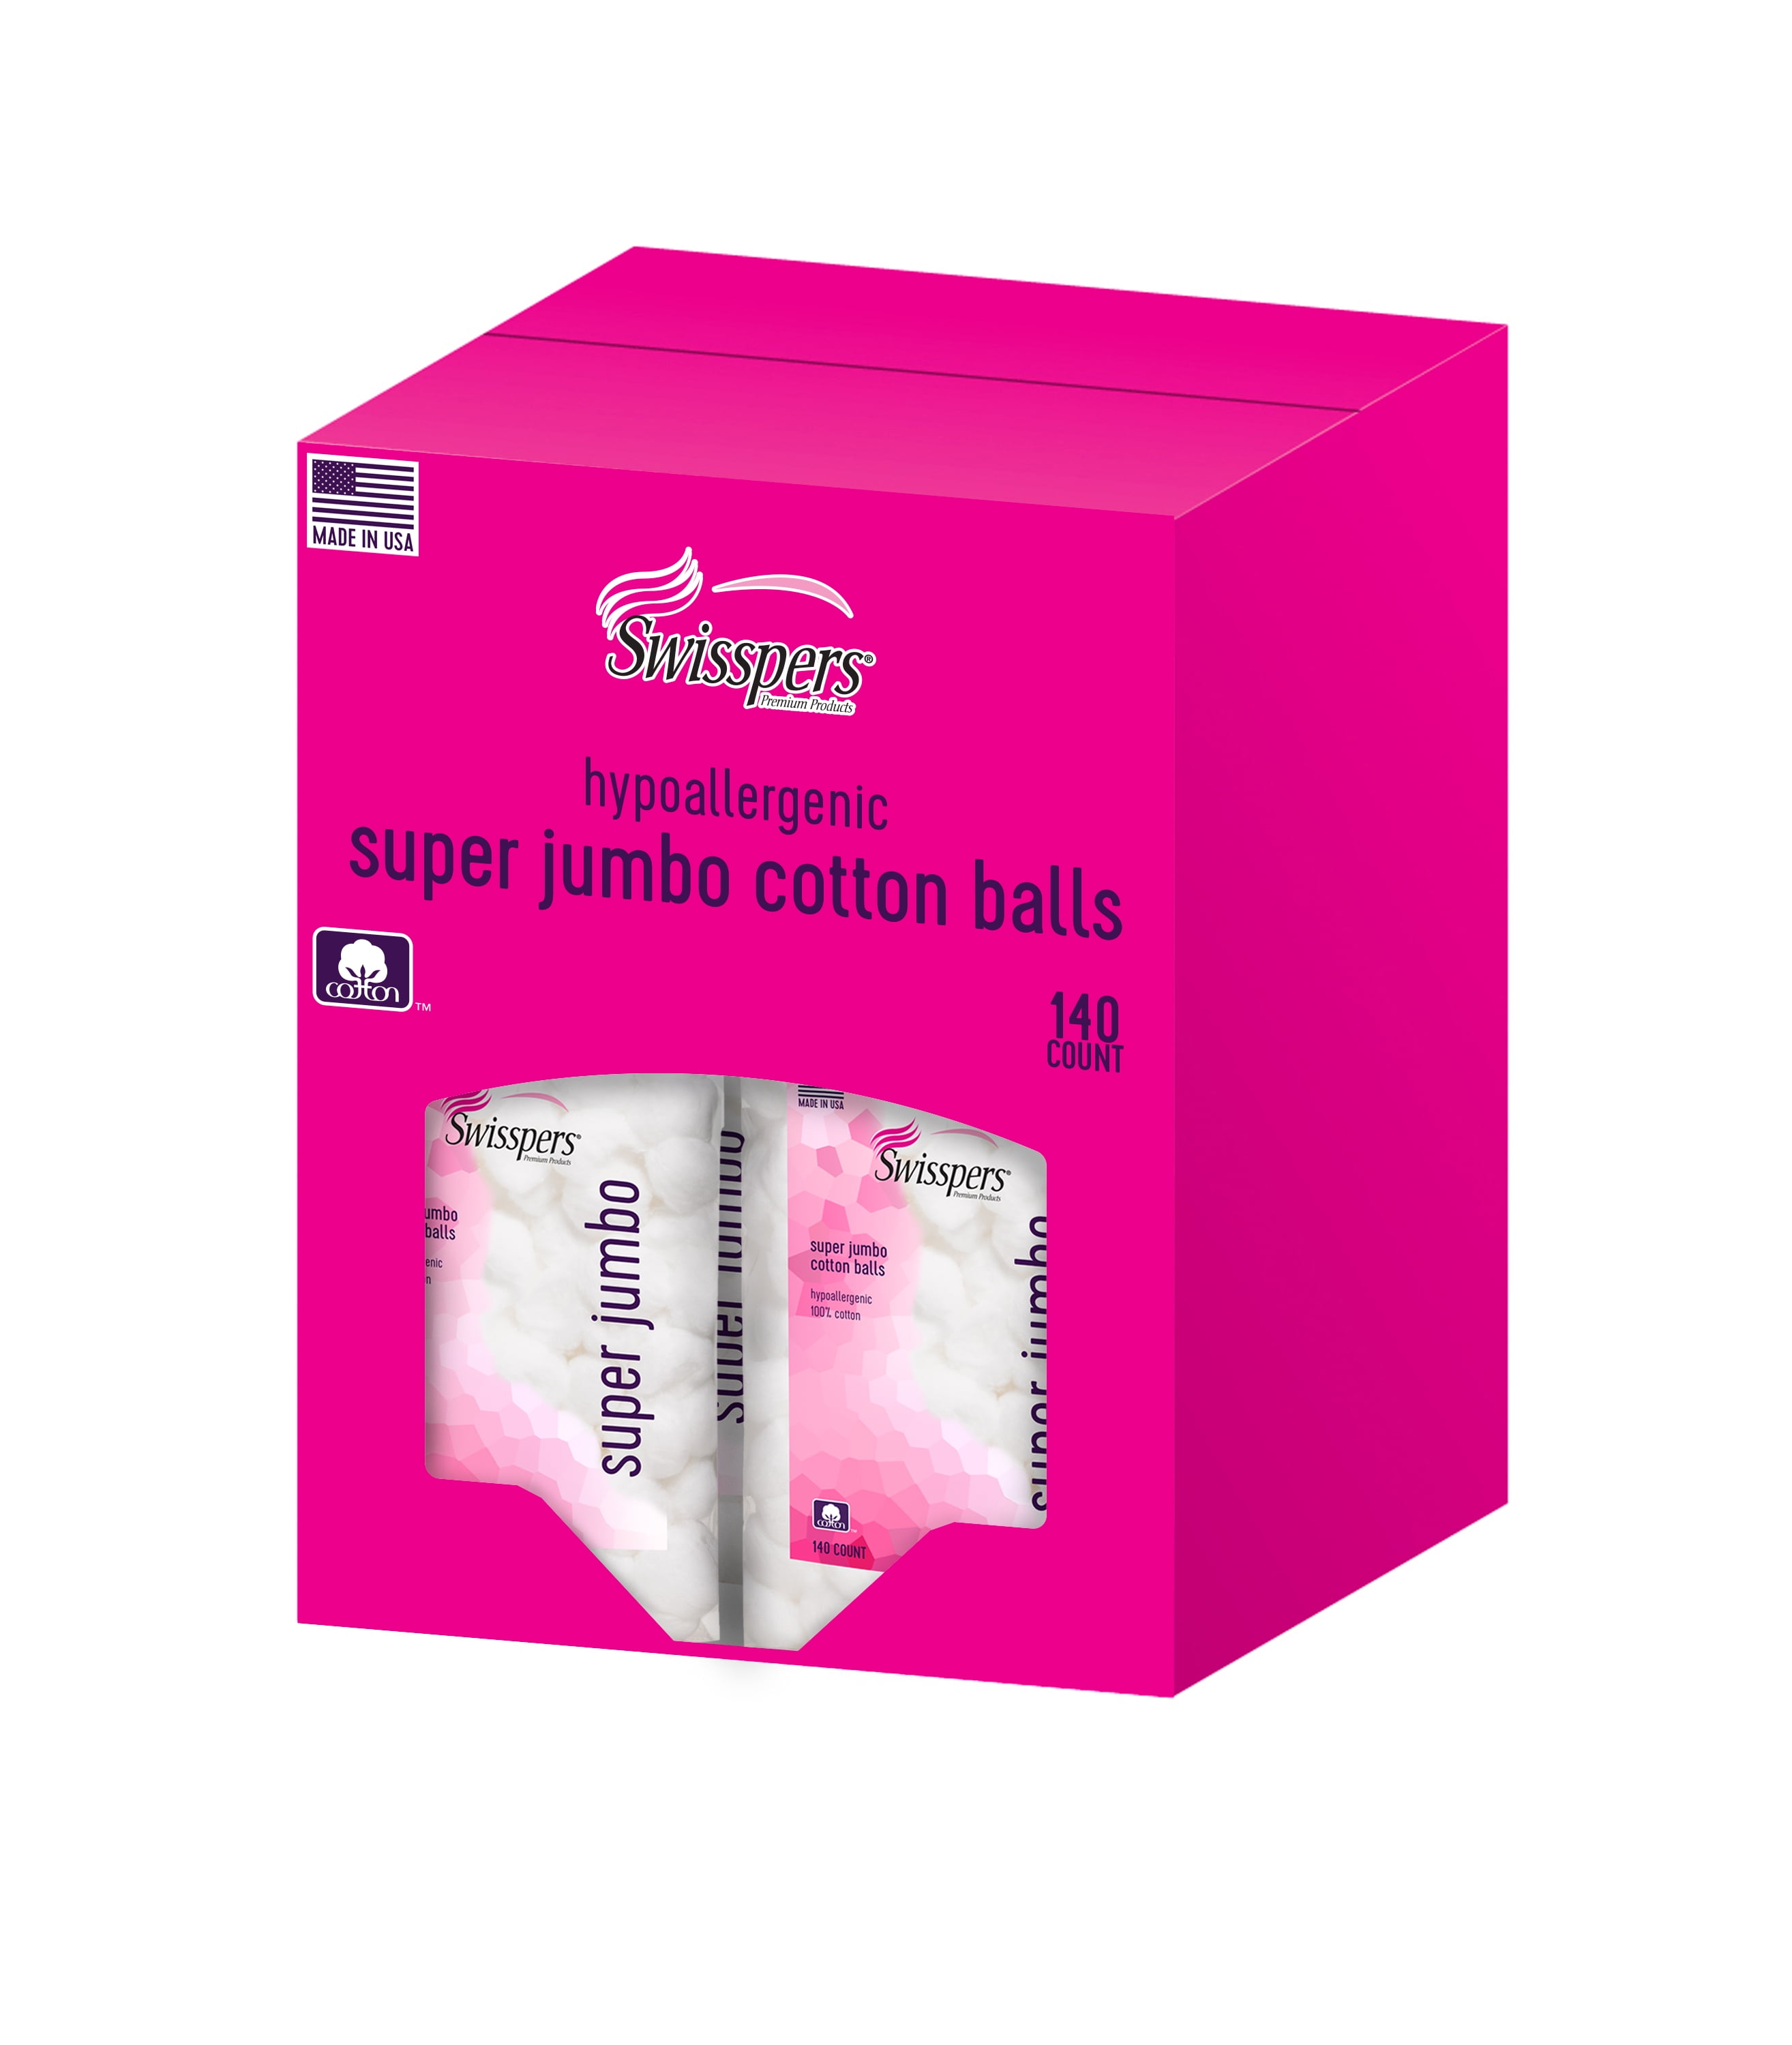 Swisspers 140ct, 100% cotton, white, Premium Hypoallergenic Super Jumbo  Cotton Balls 